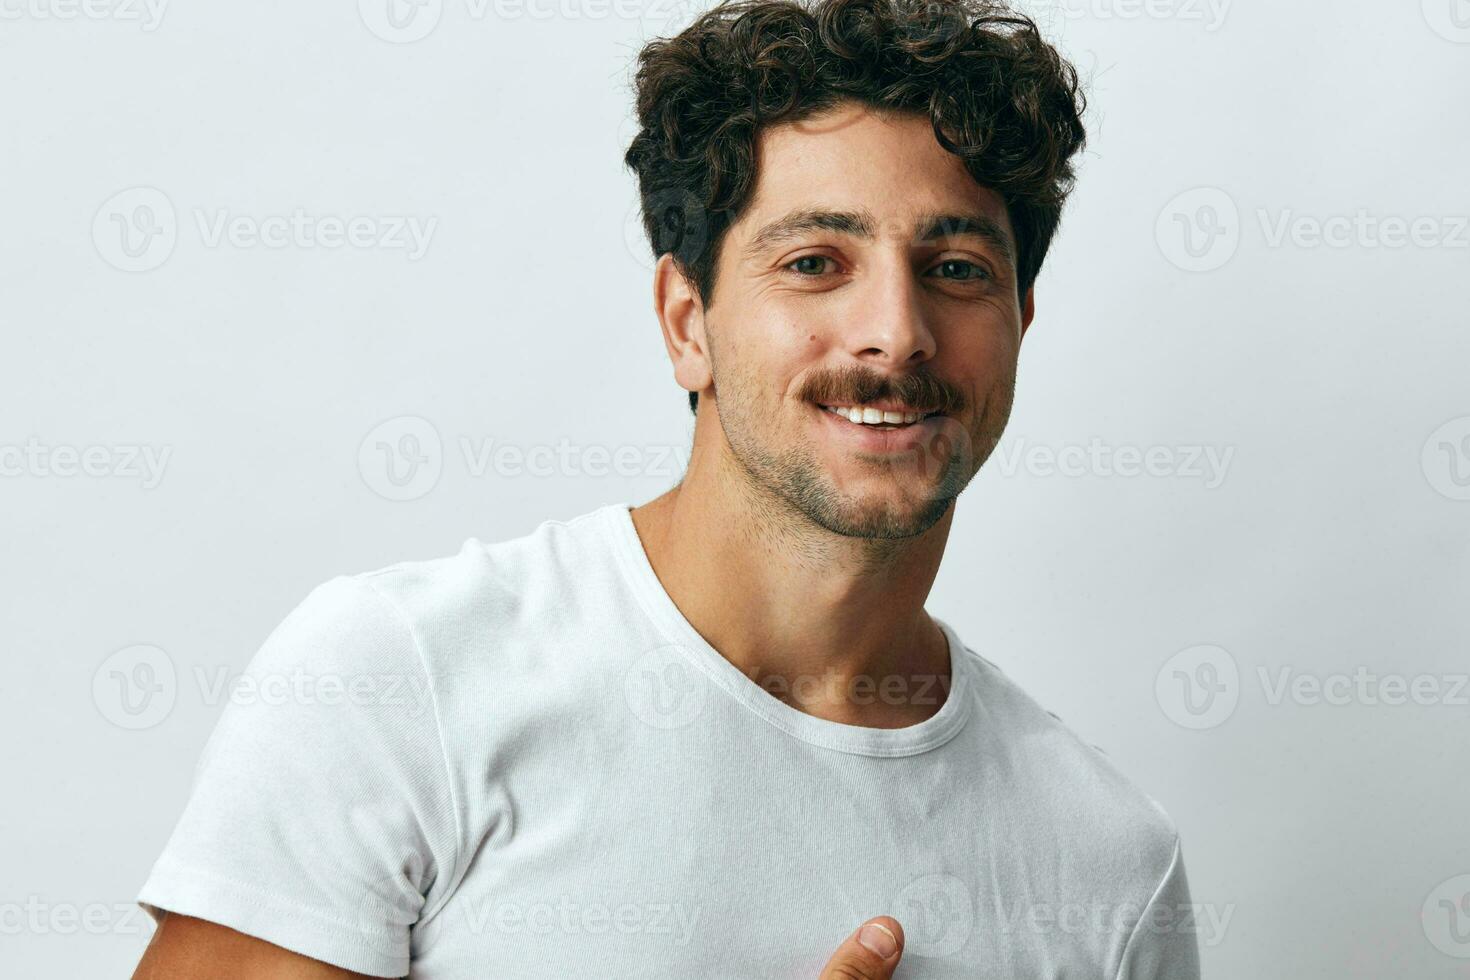 Mens knap glimlach gezicht geïsoleerd mode portret t-shirt wit geluk hipster achtergrond levensstijl foto